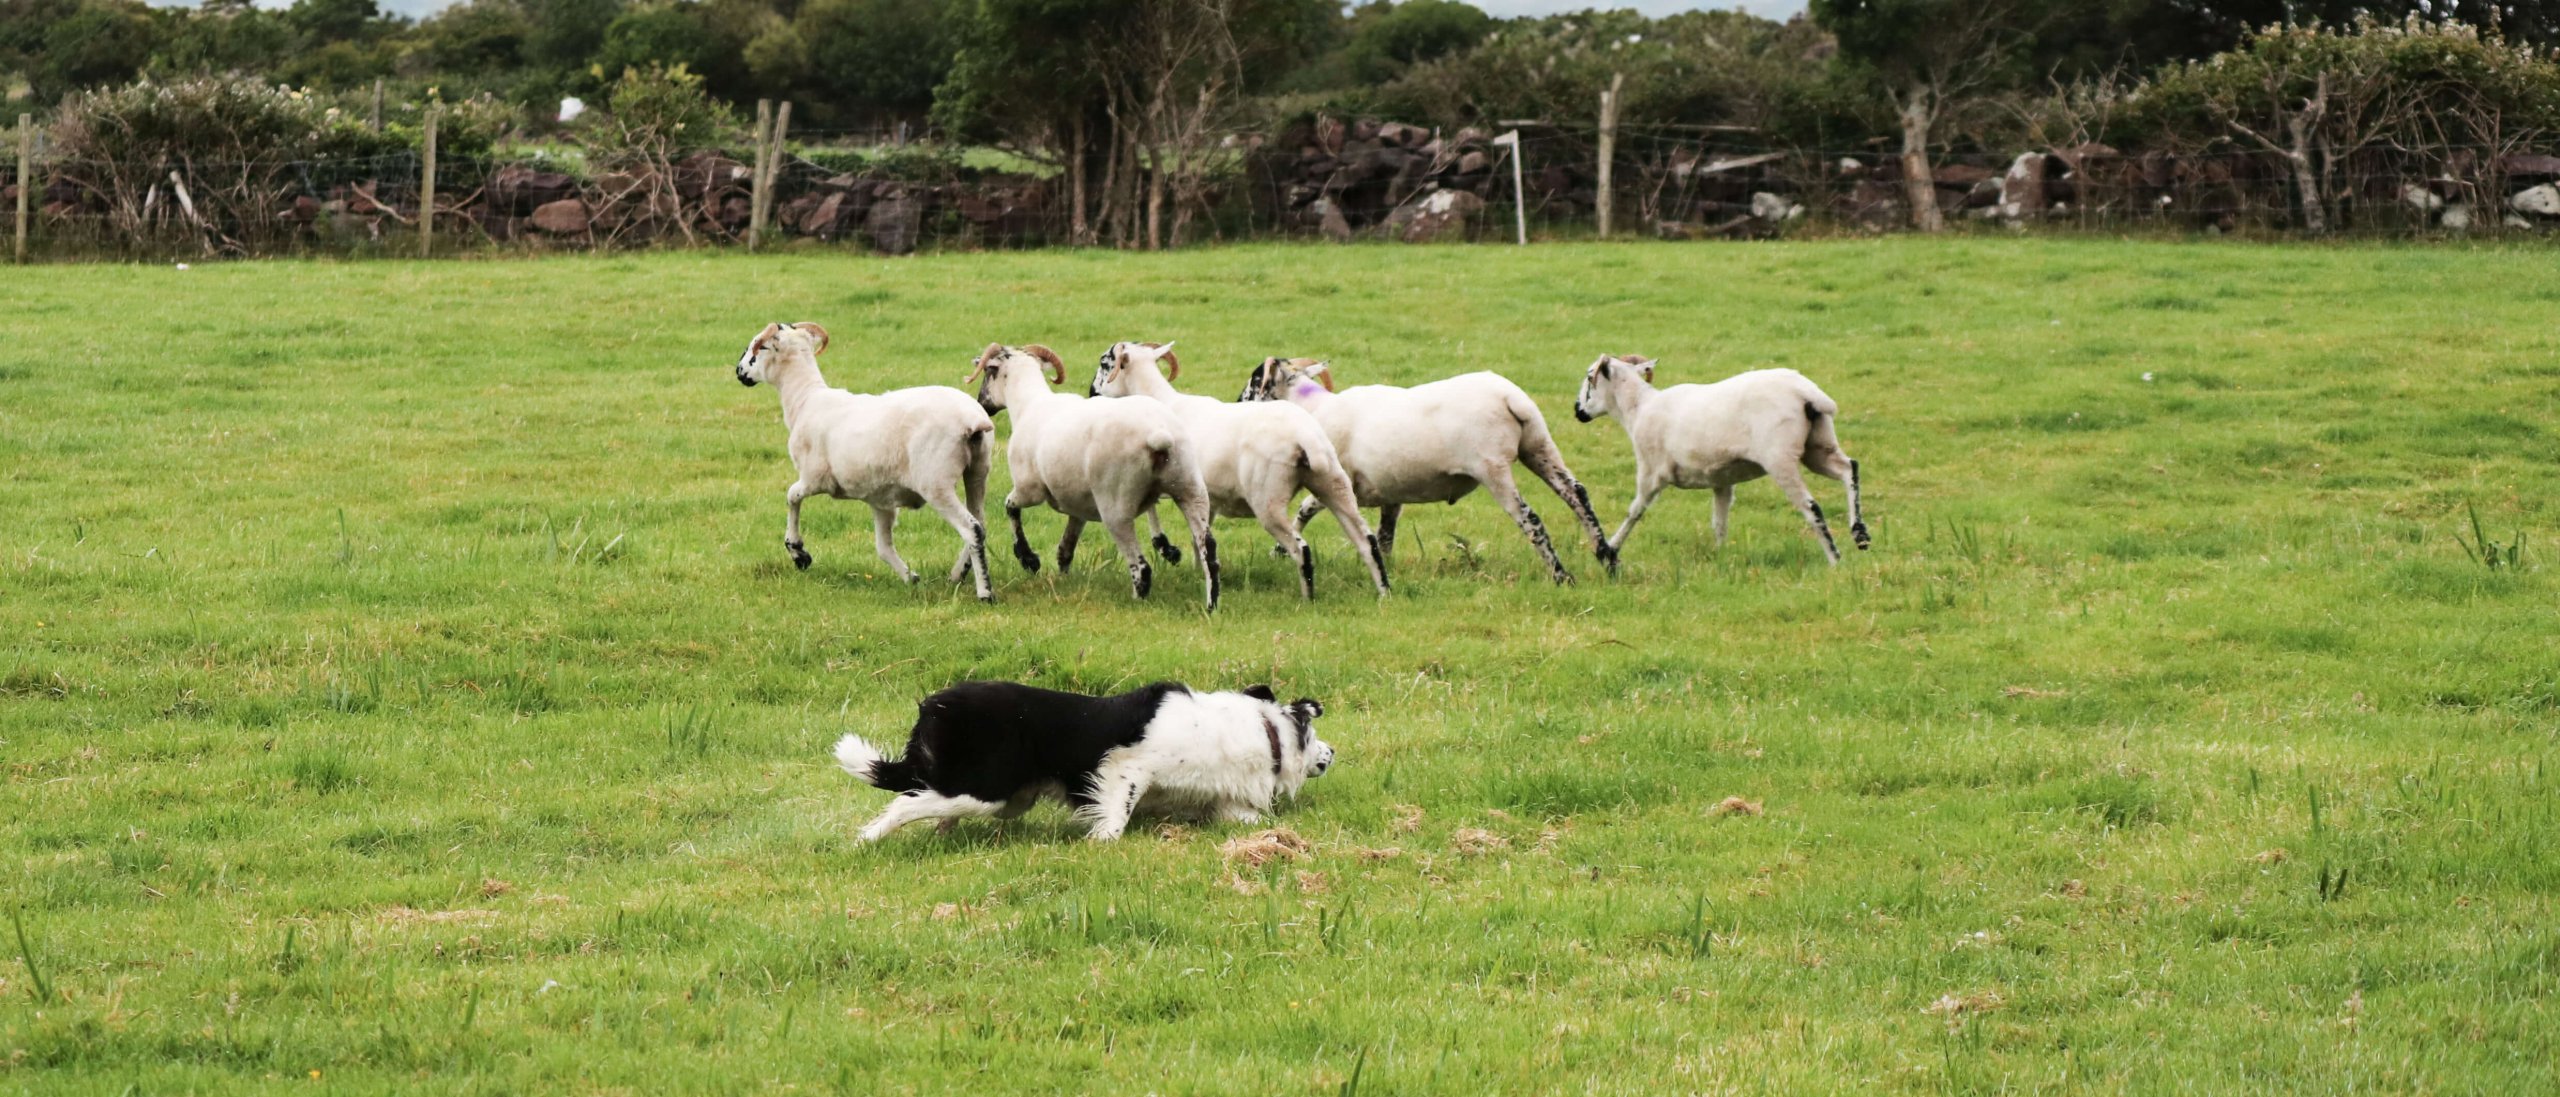 Crouching sheepdog herding a group of six sheep